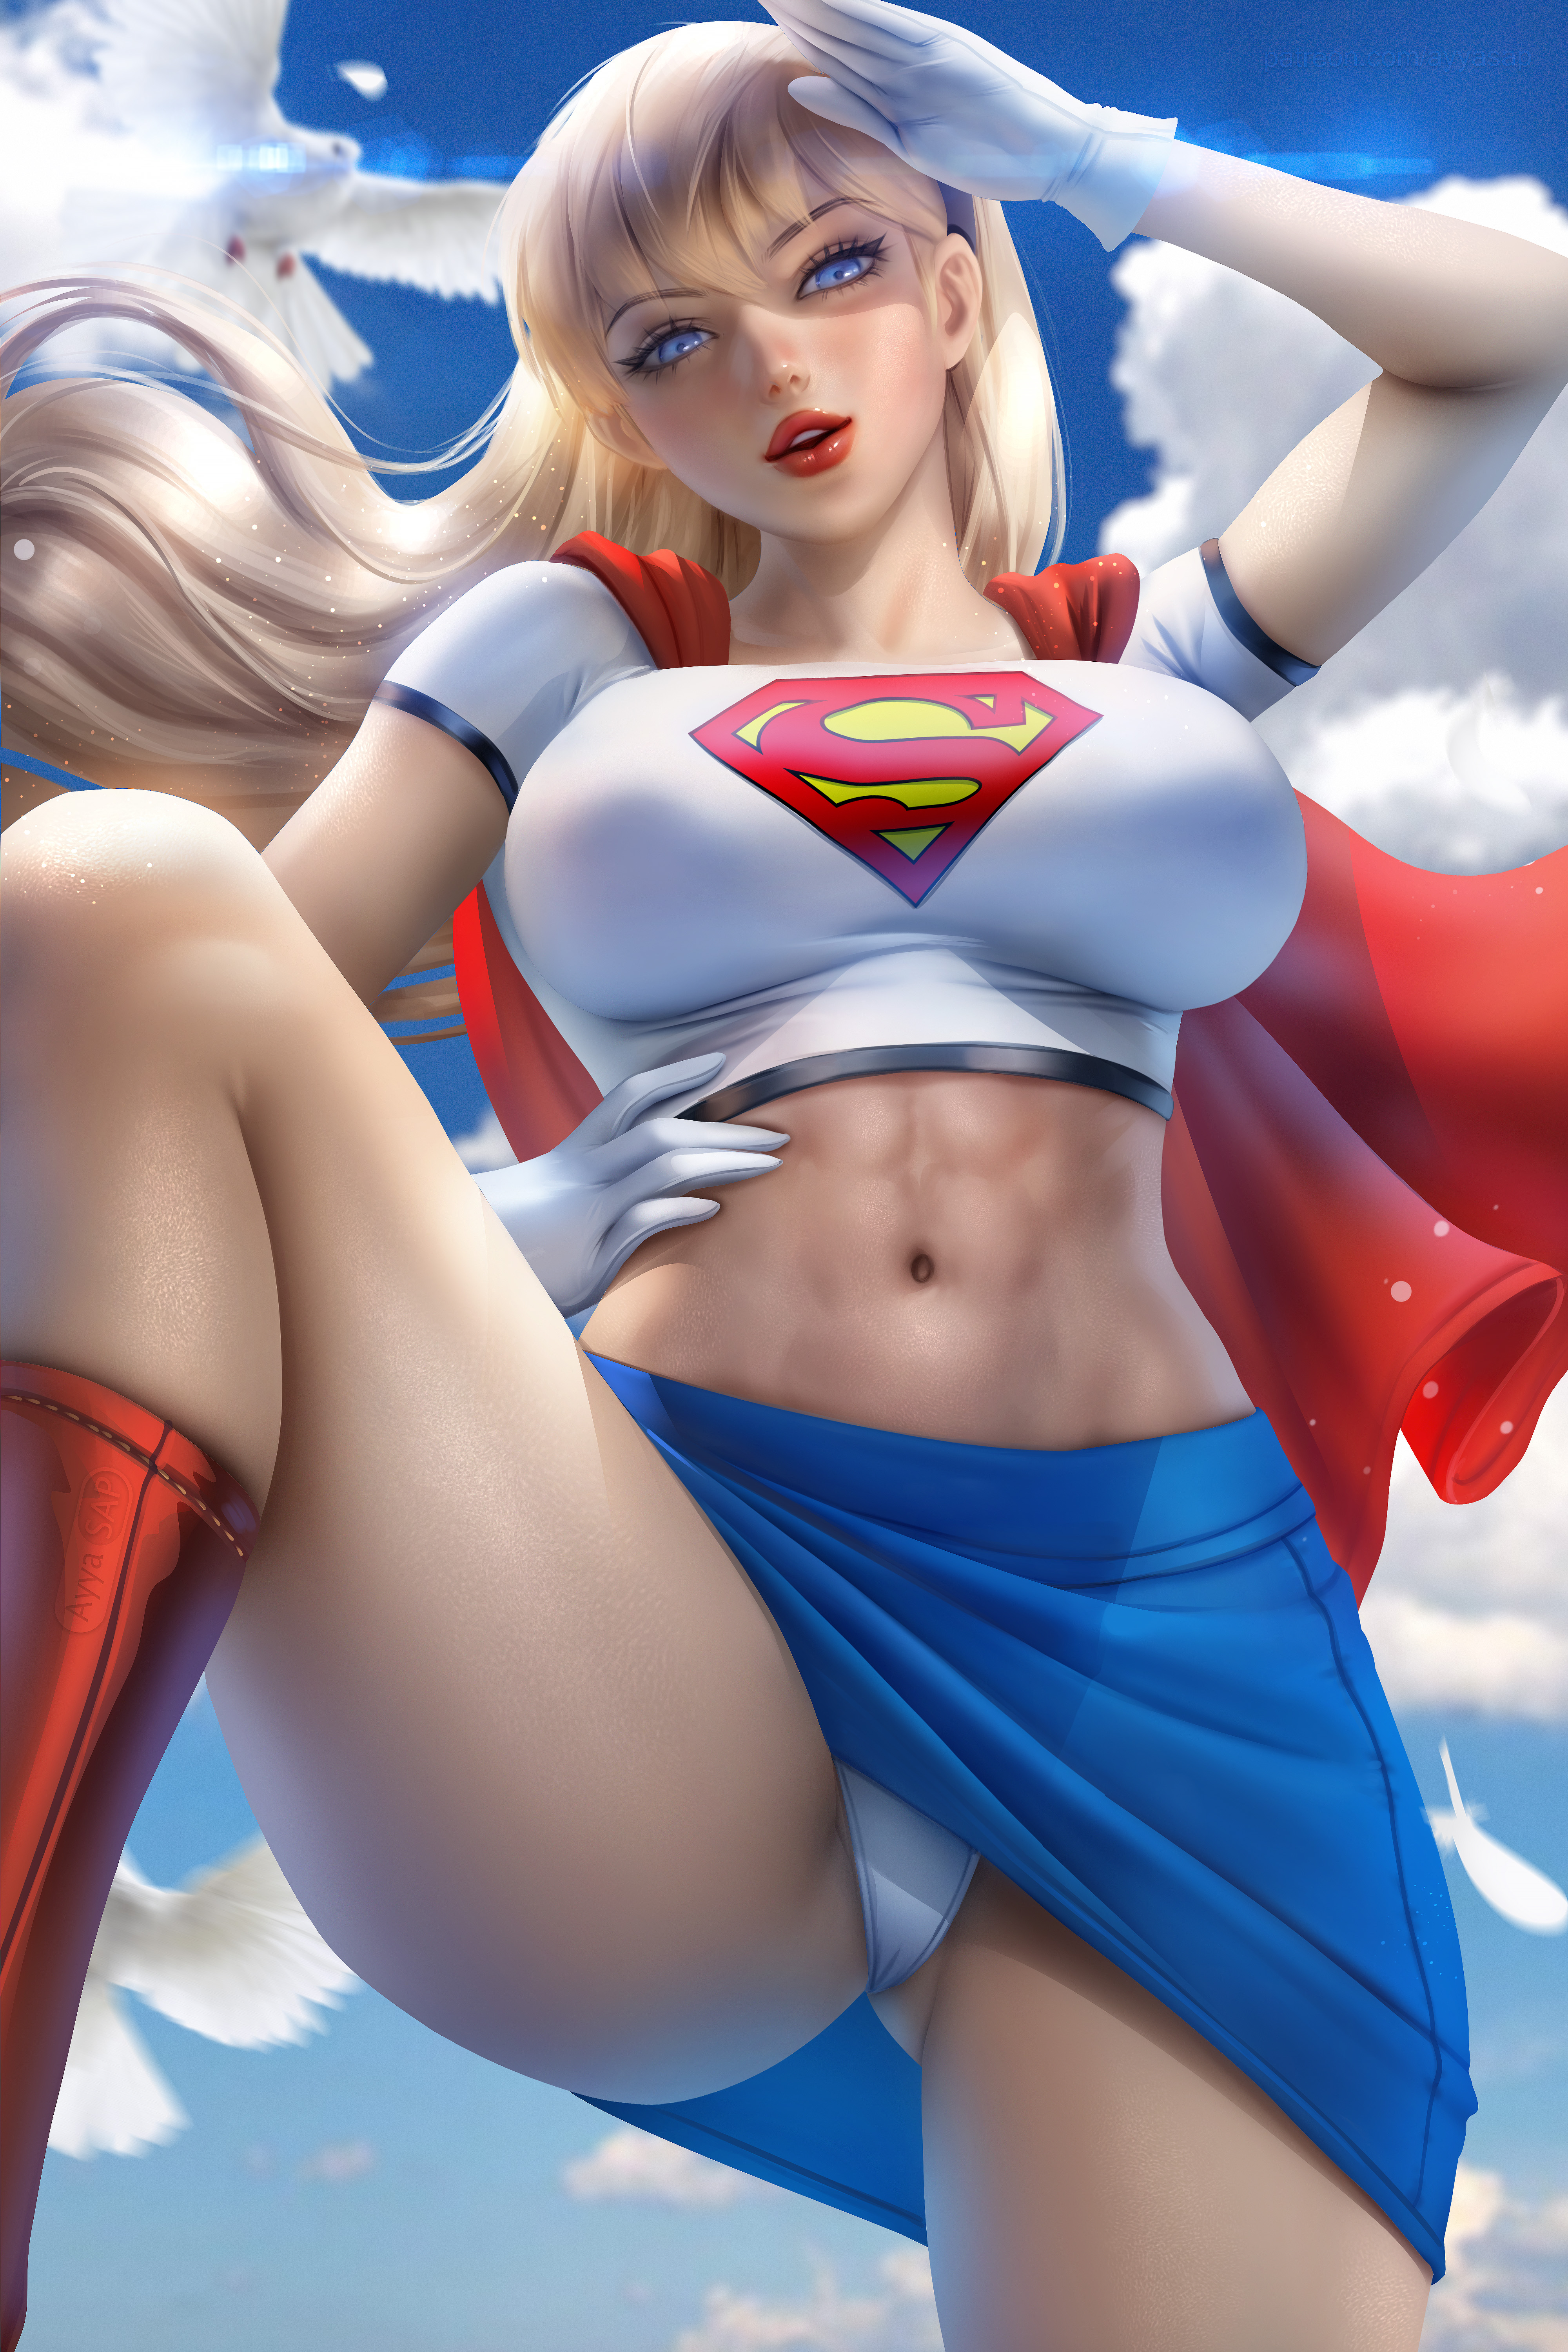 General 4000x6000 Supergirl DC Comics superheroines blonde fictional character cape T-shirt miniskirt underwear panties white panties upskirt thighs 6-pack gloves 2D artwork drawing fan art Ayya Saparniyazova blue eyes red lipstick abs